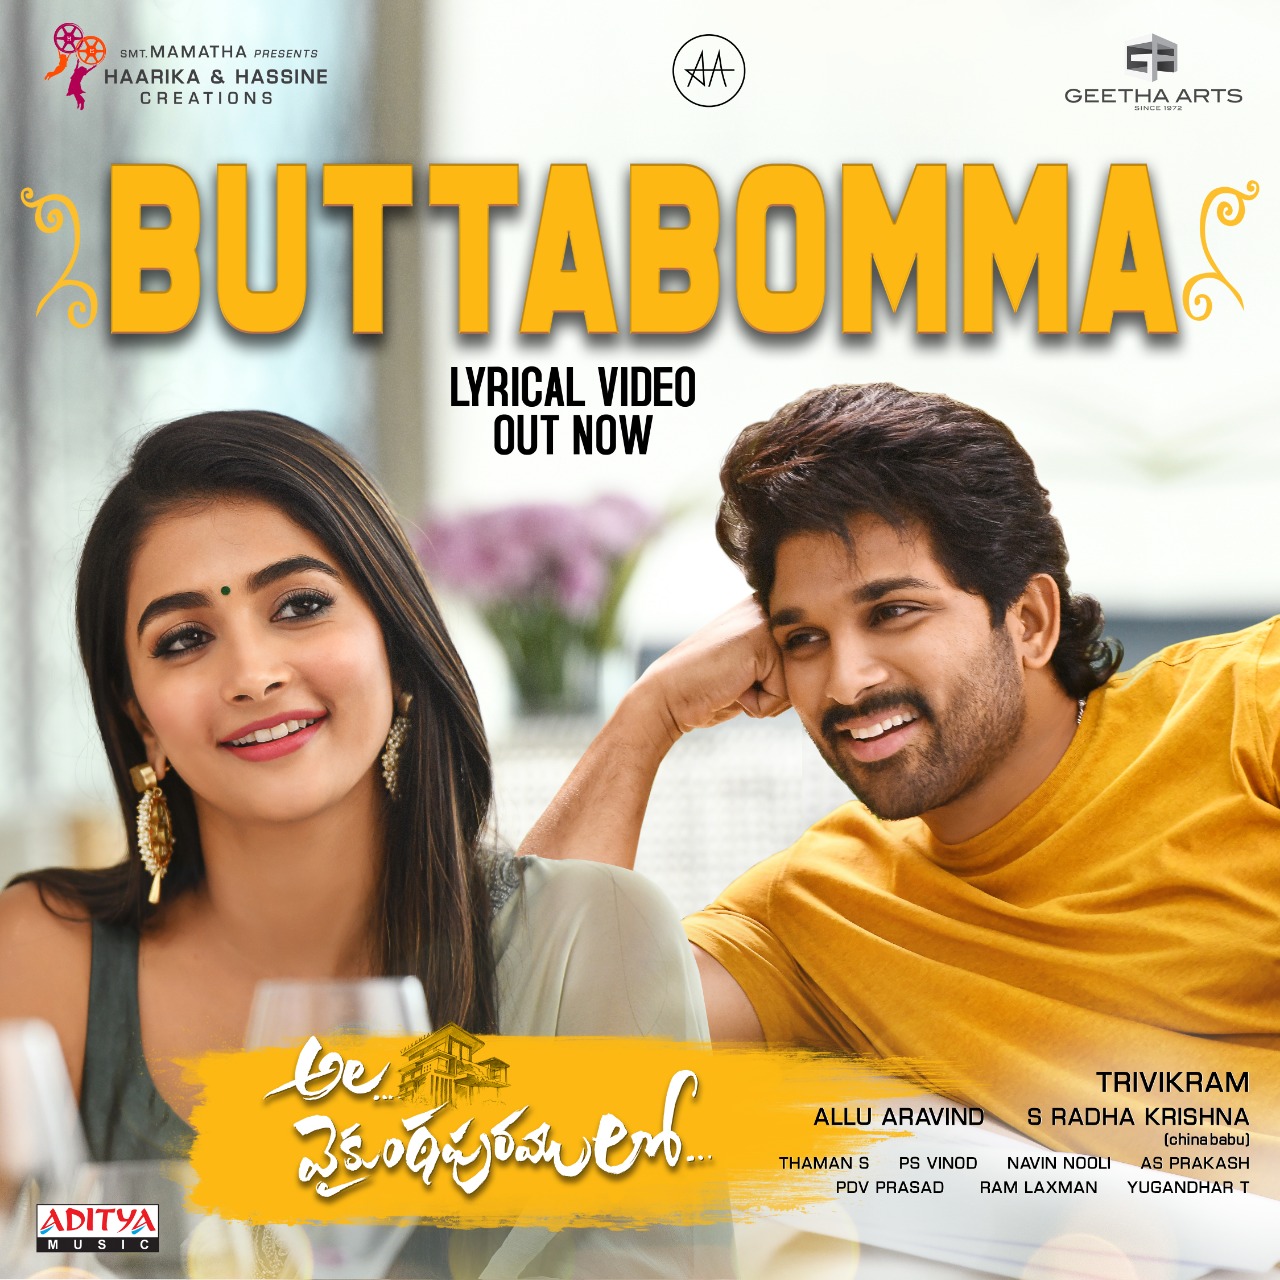 ‘Butta Bomma’ song from Allu Arjun’s Ala Vaikunthapurramuloo garners good buzz